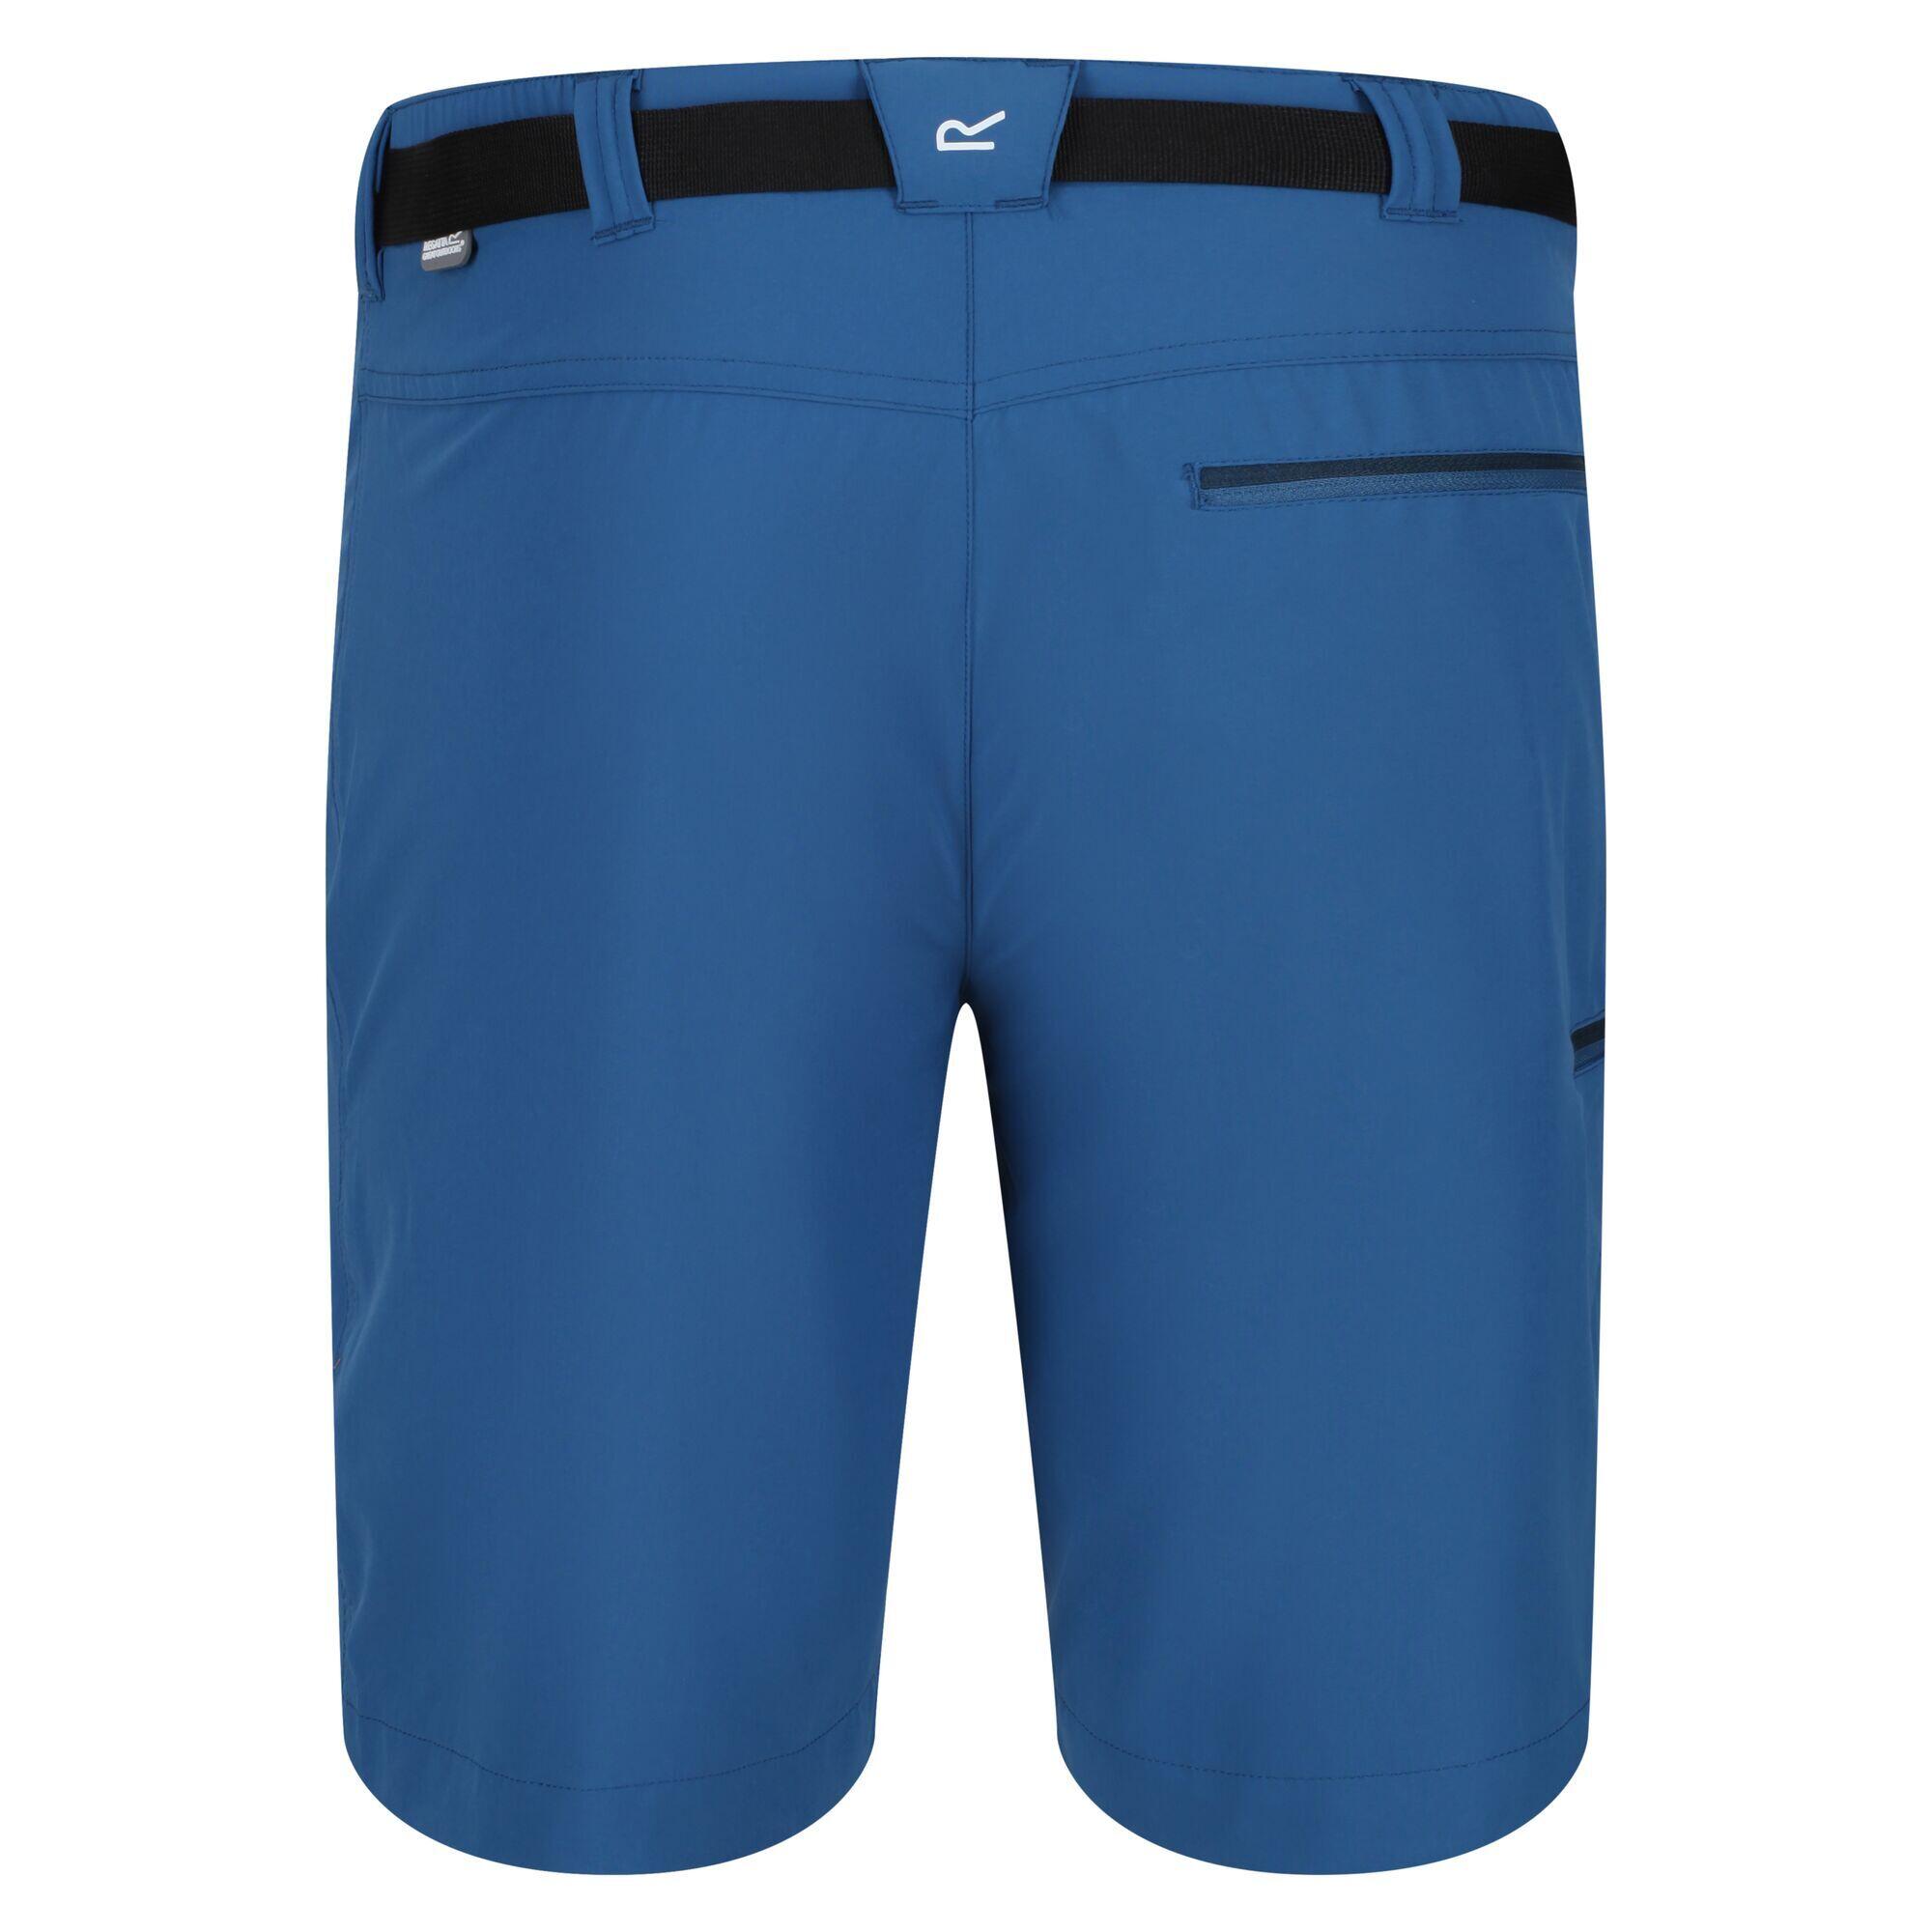 Xert Stretch III Men's Hiking Shorts - Dynasty Blue 6/6